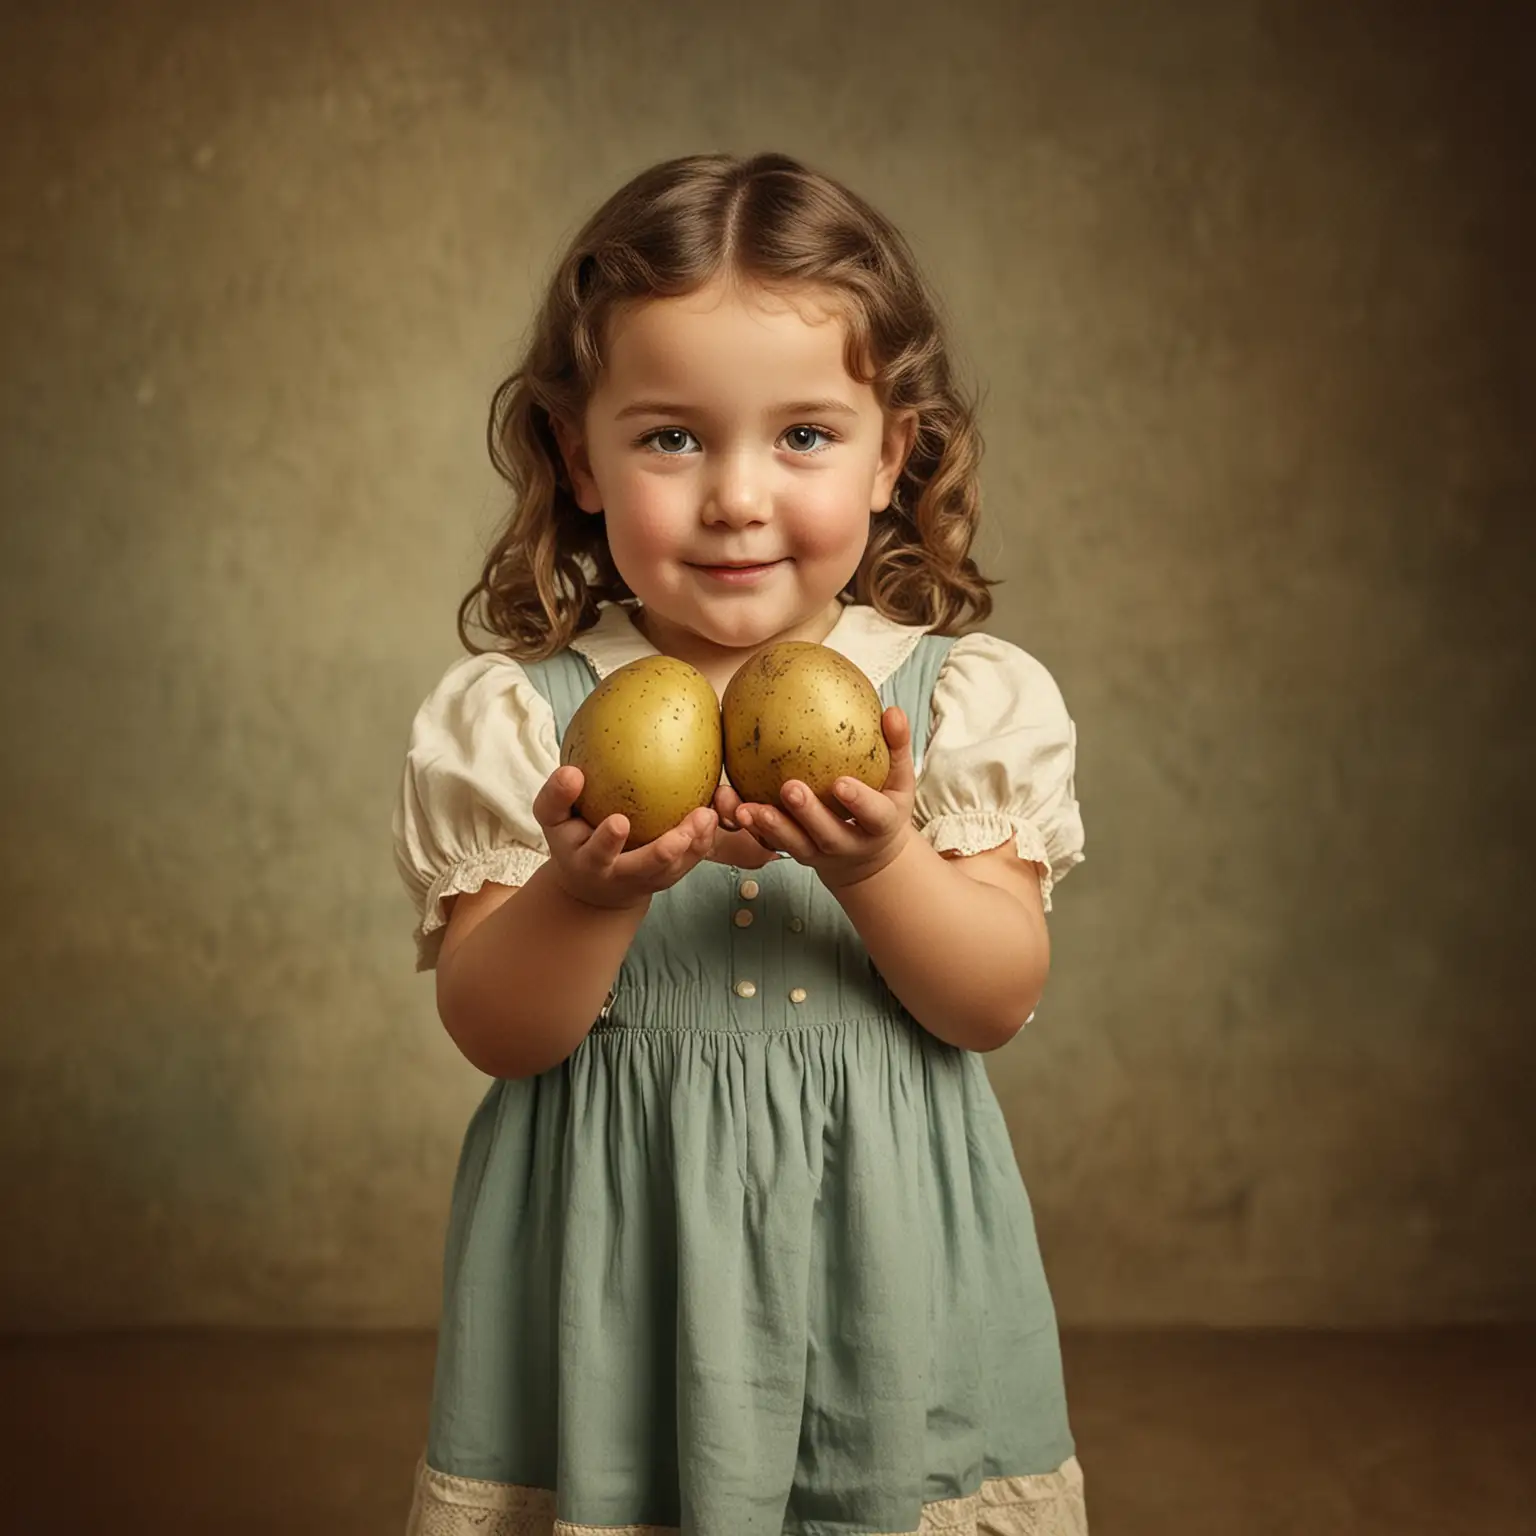 Vintage Child Holding Potatoes